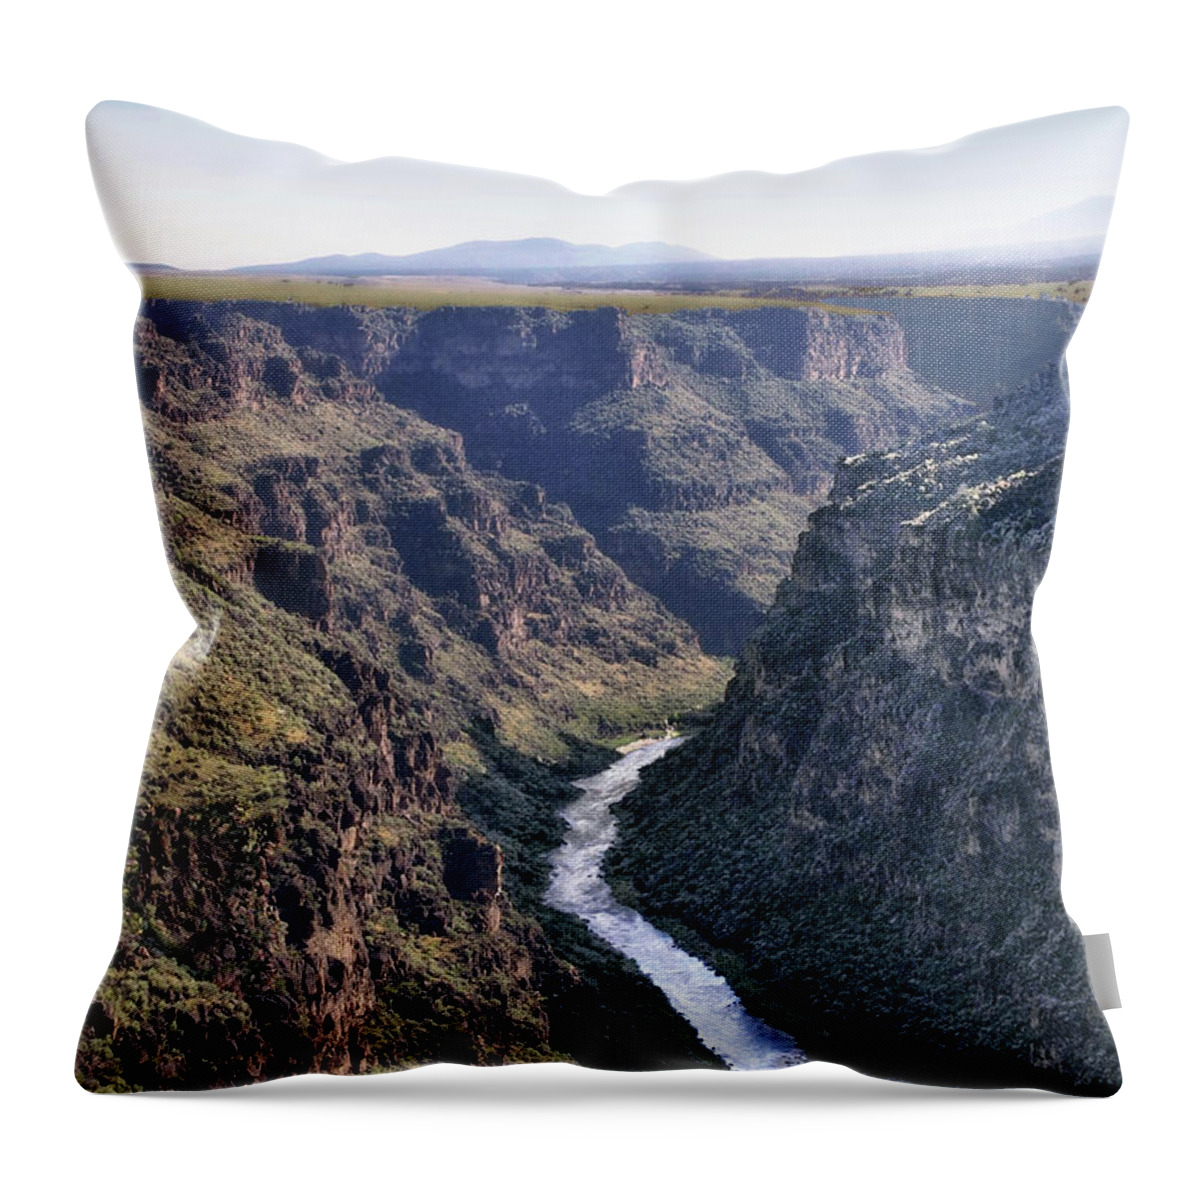 Rio Grande Throw Pillow featuring the photograph Rio Grande Gorge by Jim Hill